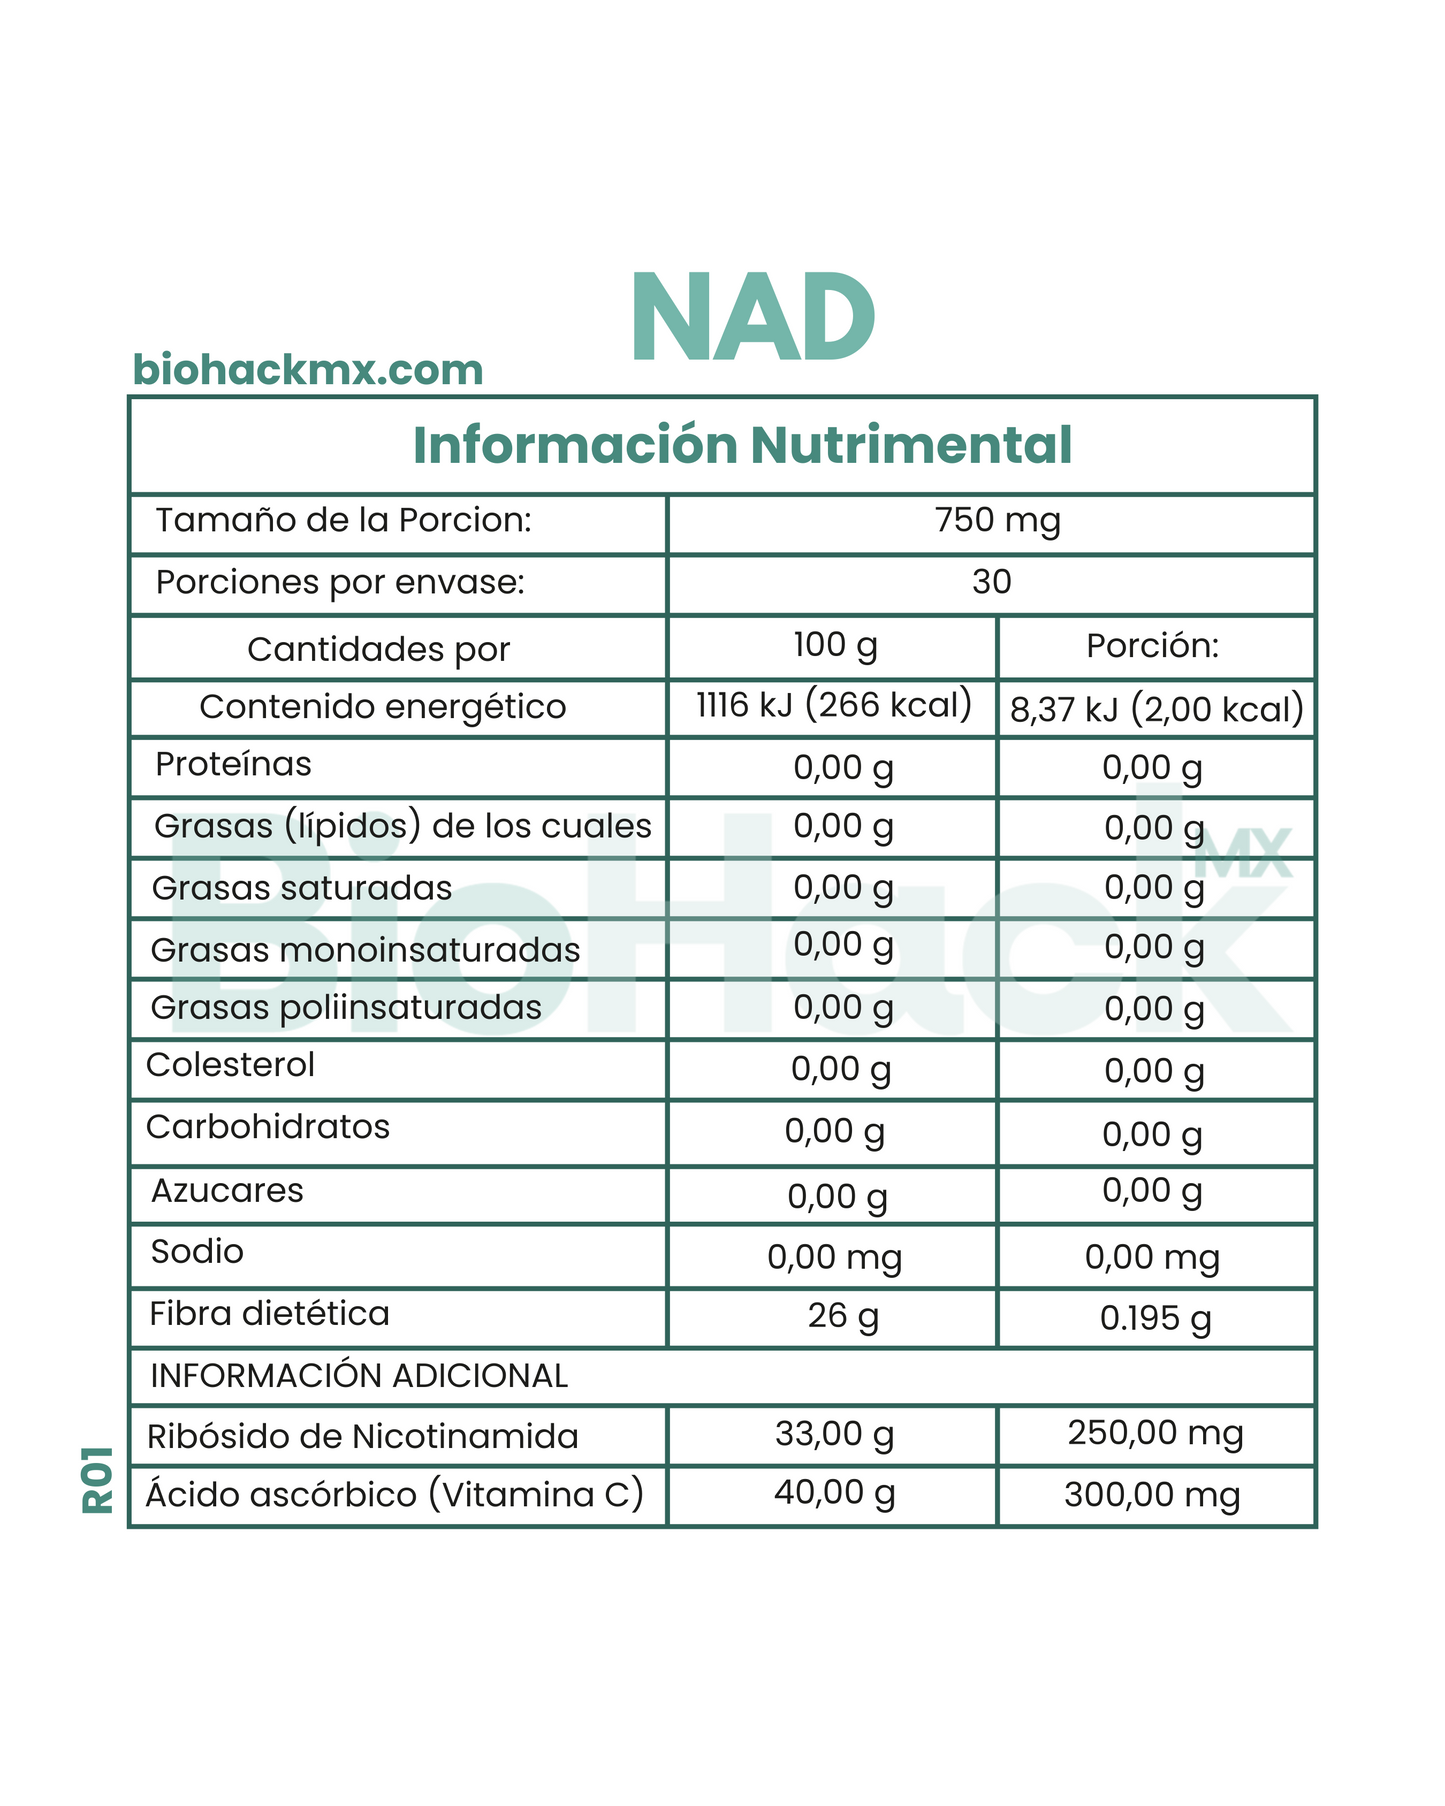 Triada 1 mes - Precursor de NAD + Quercetina + Luteolina